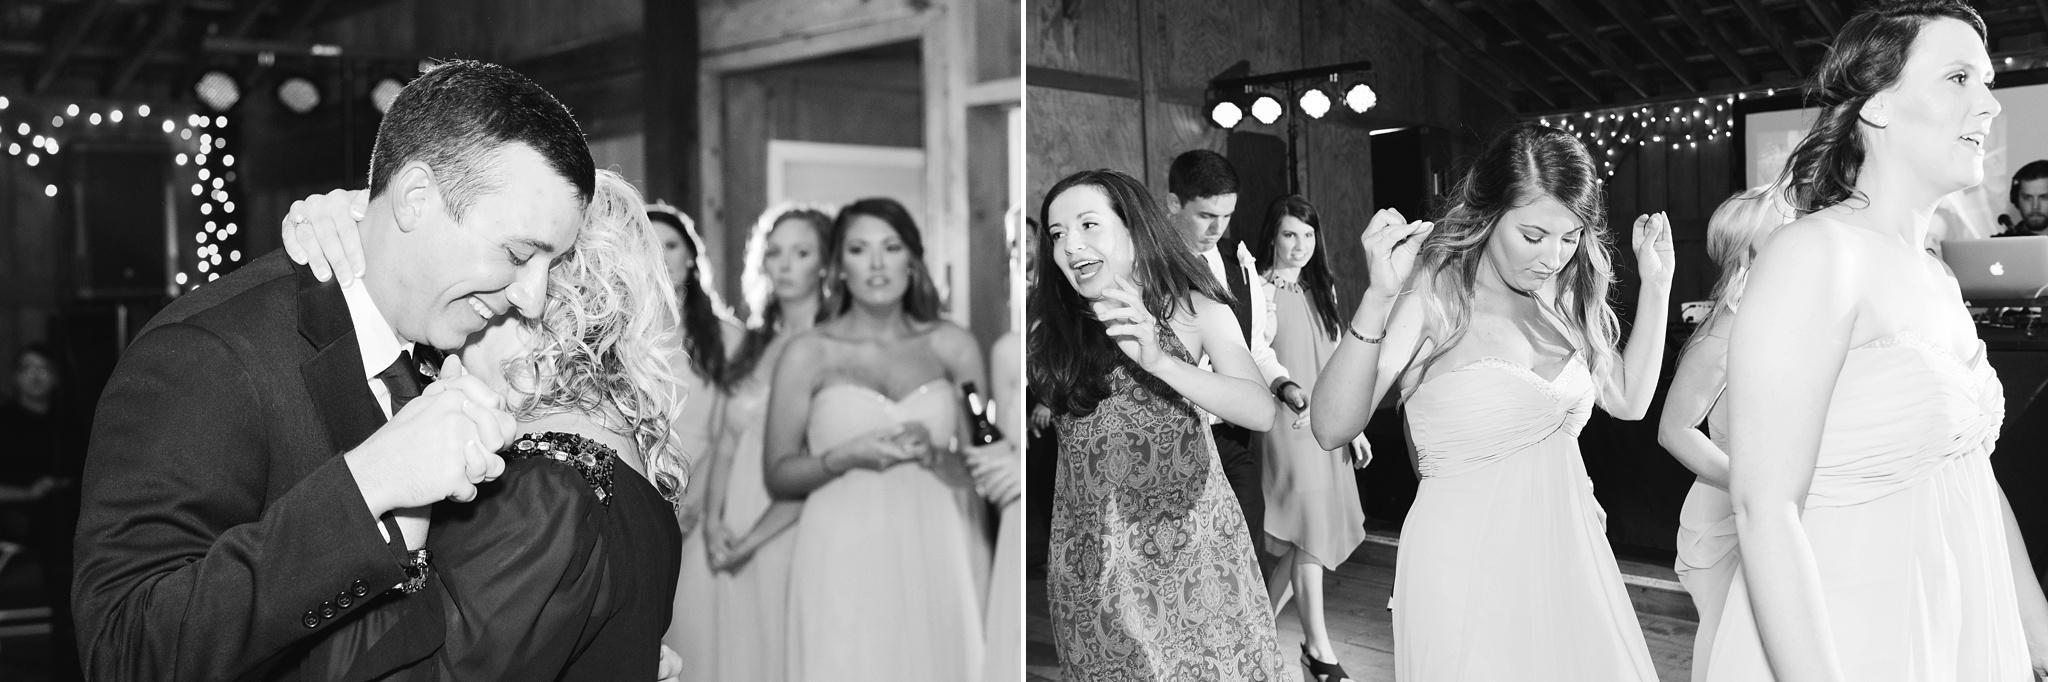 Gray and Black Classic Outdoor Wedding | Birmingham Alabama Wedding Photographers_0053.jpg